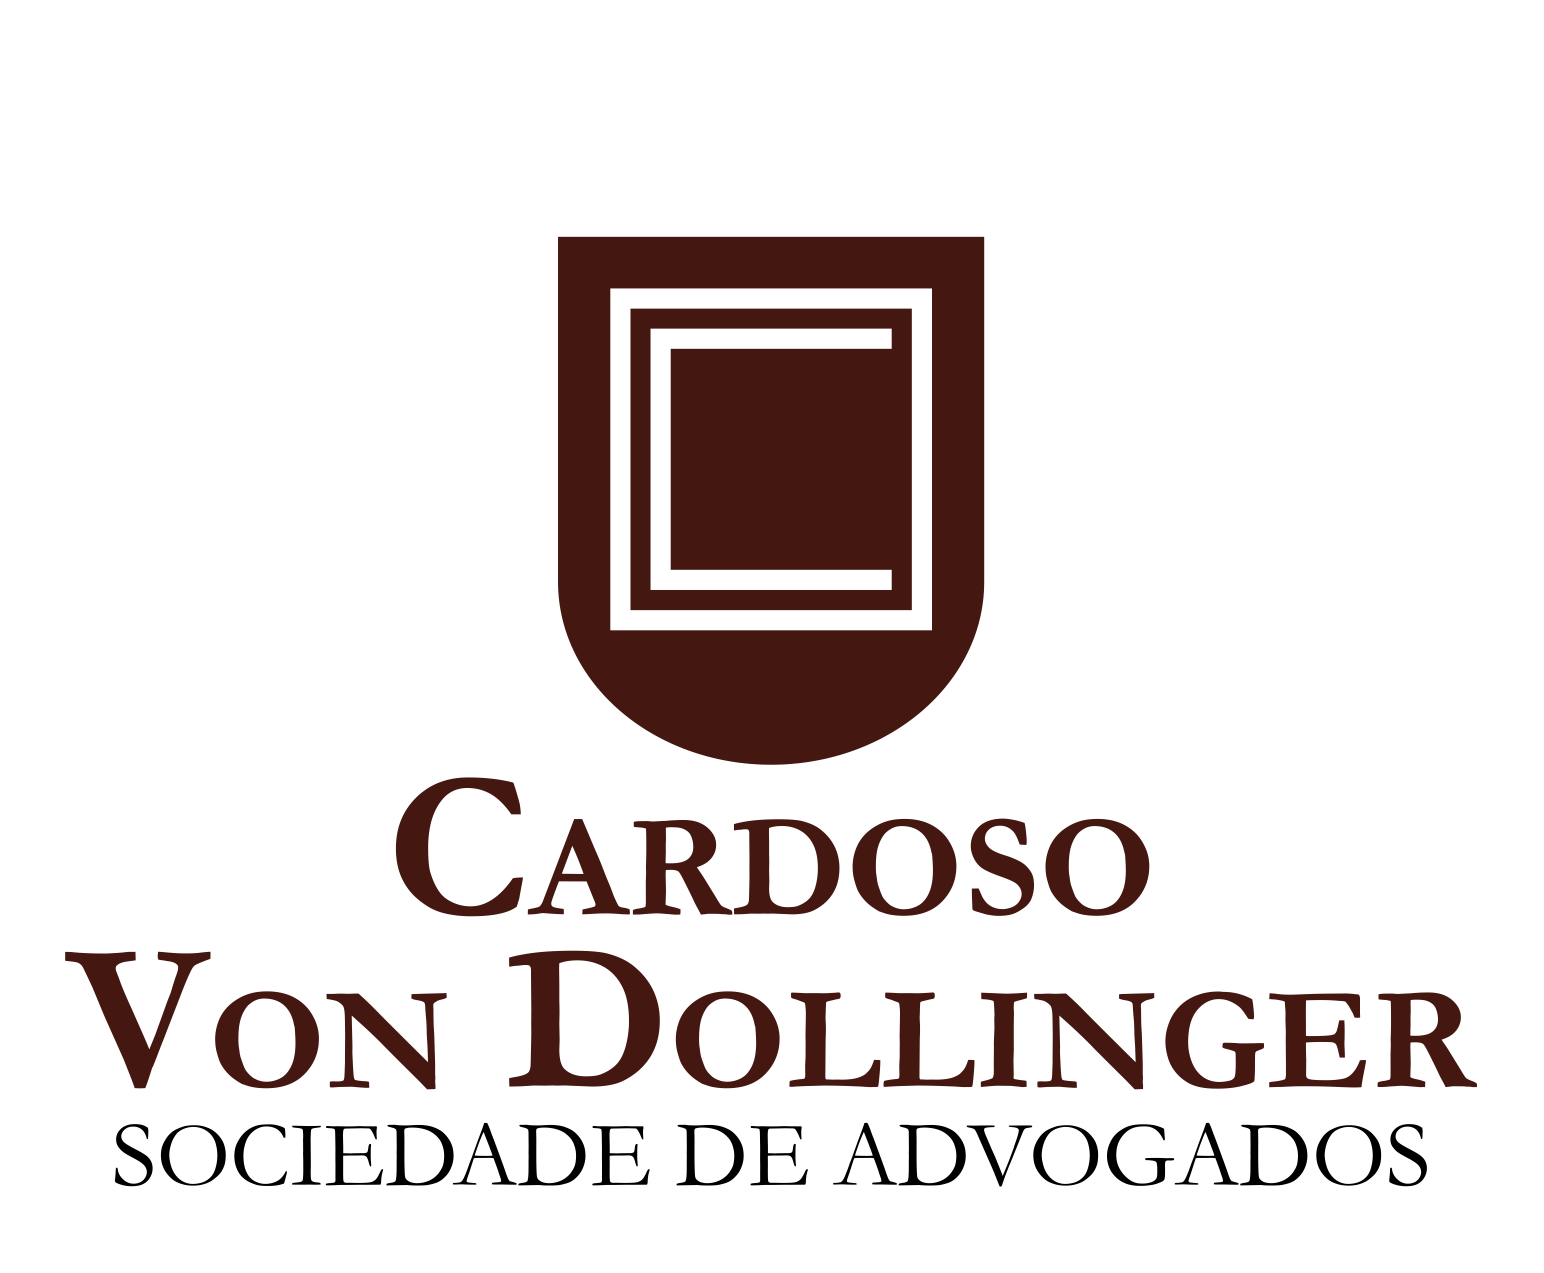 Cardoso Von Dollinger